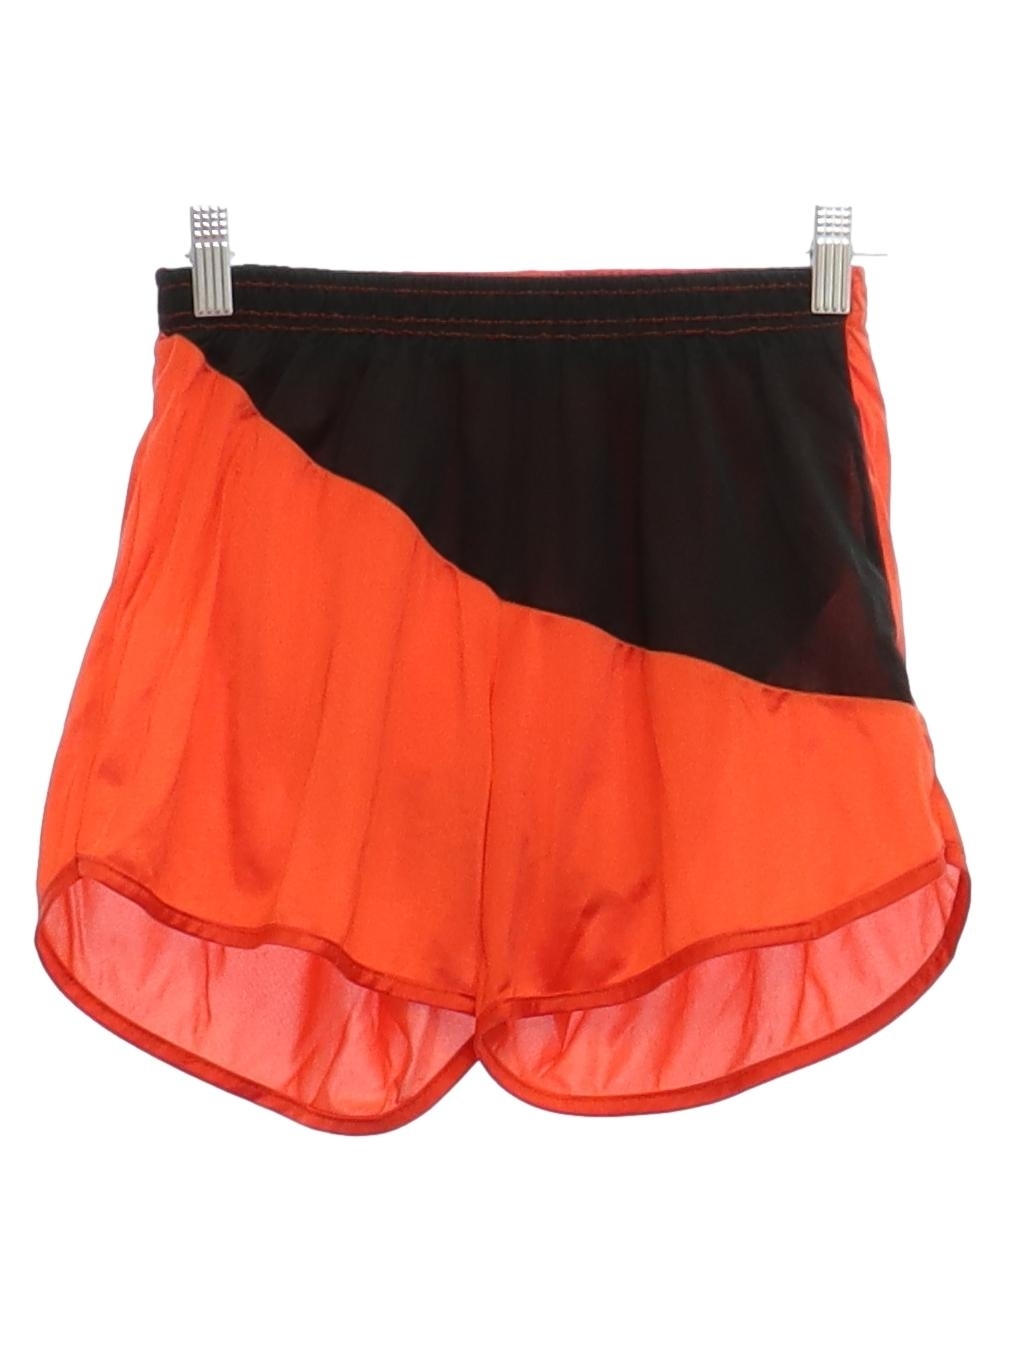 Eighties Vintage Shorts: 80s -Cobblestones- Unisex orange and black ...